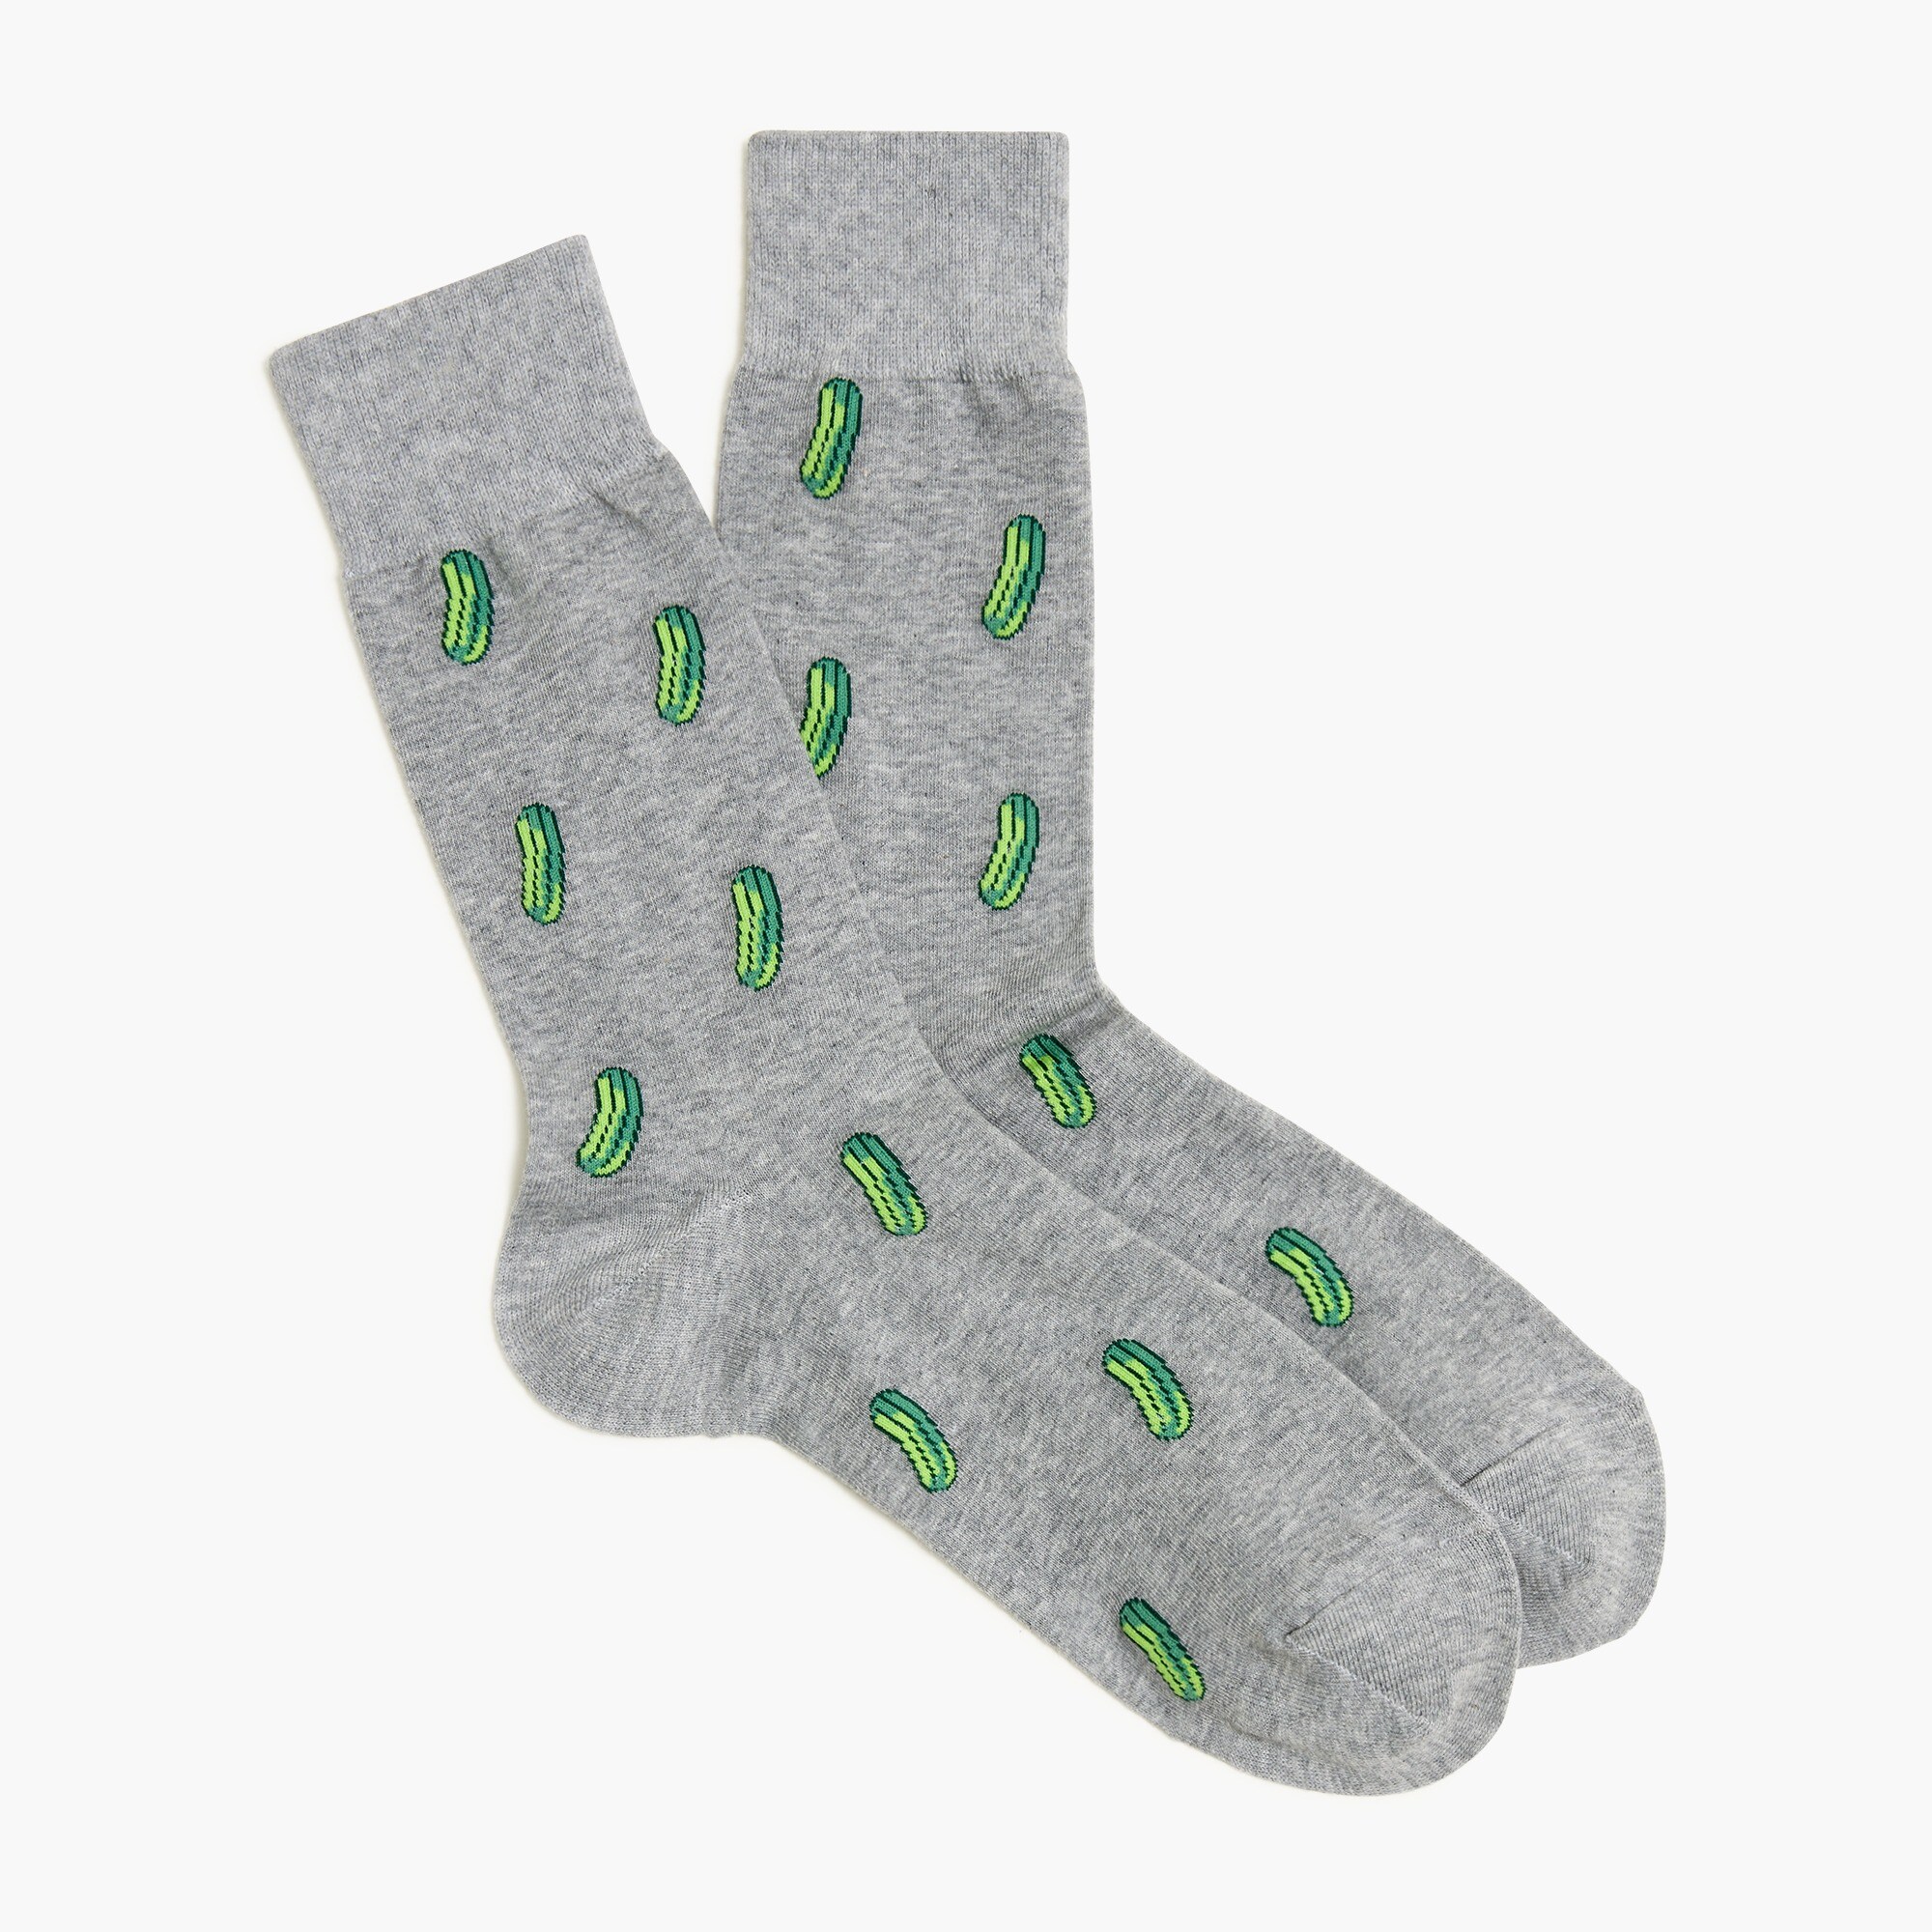 mens Pickle socks